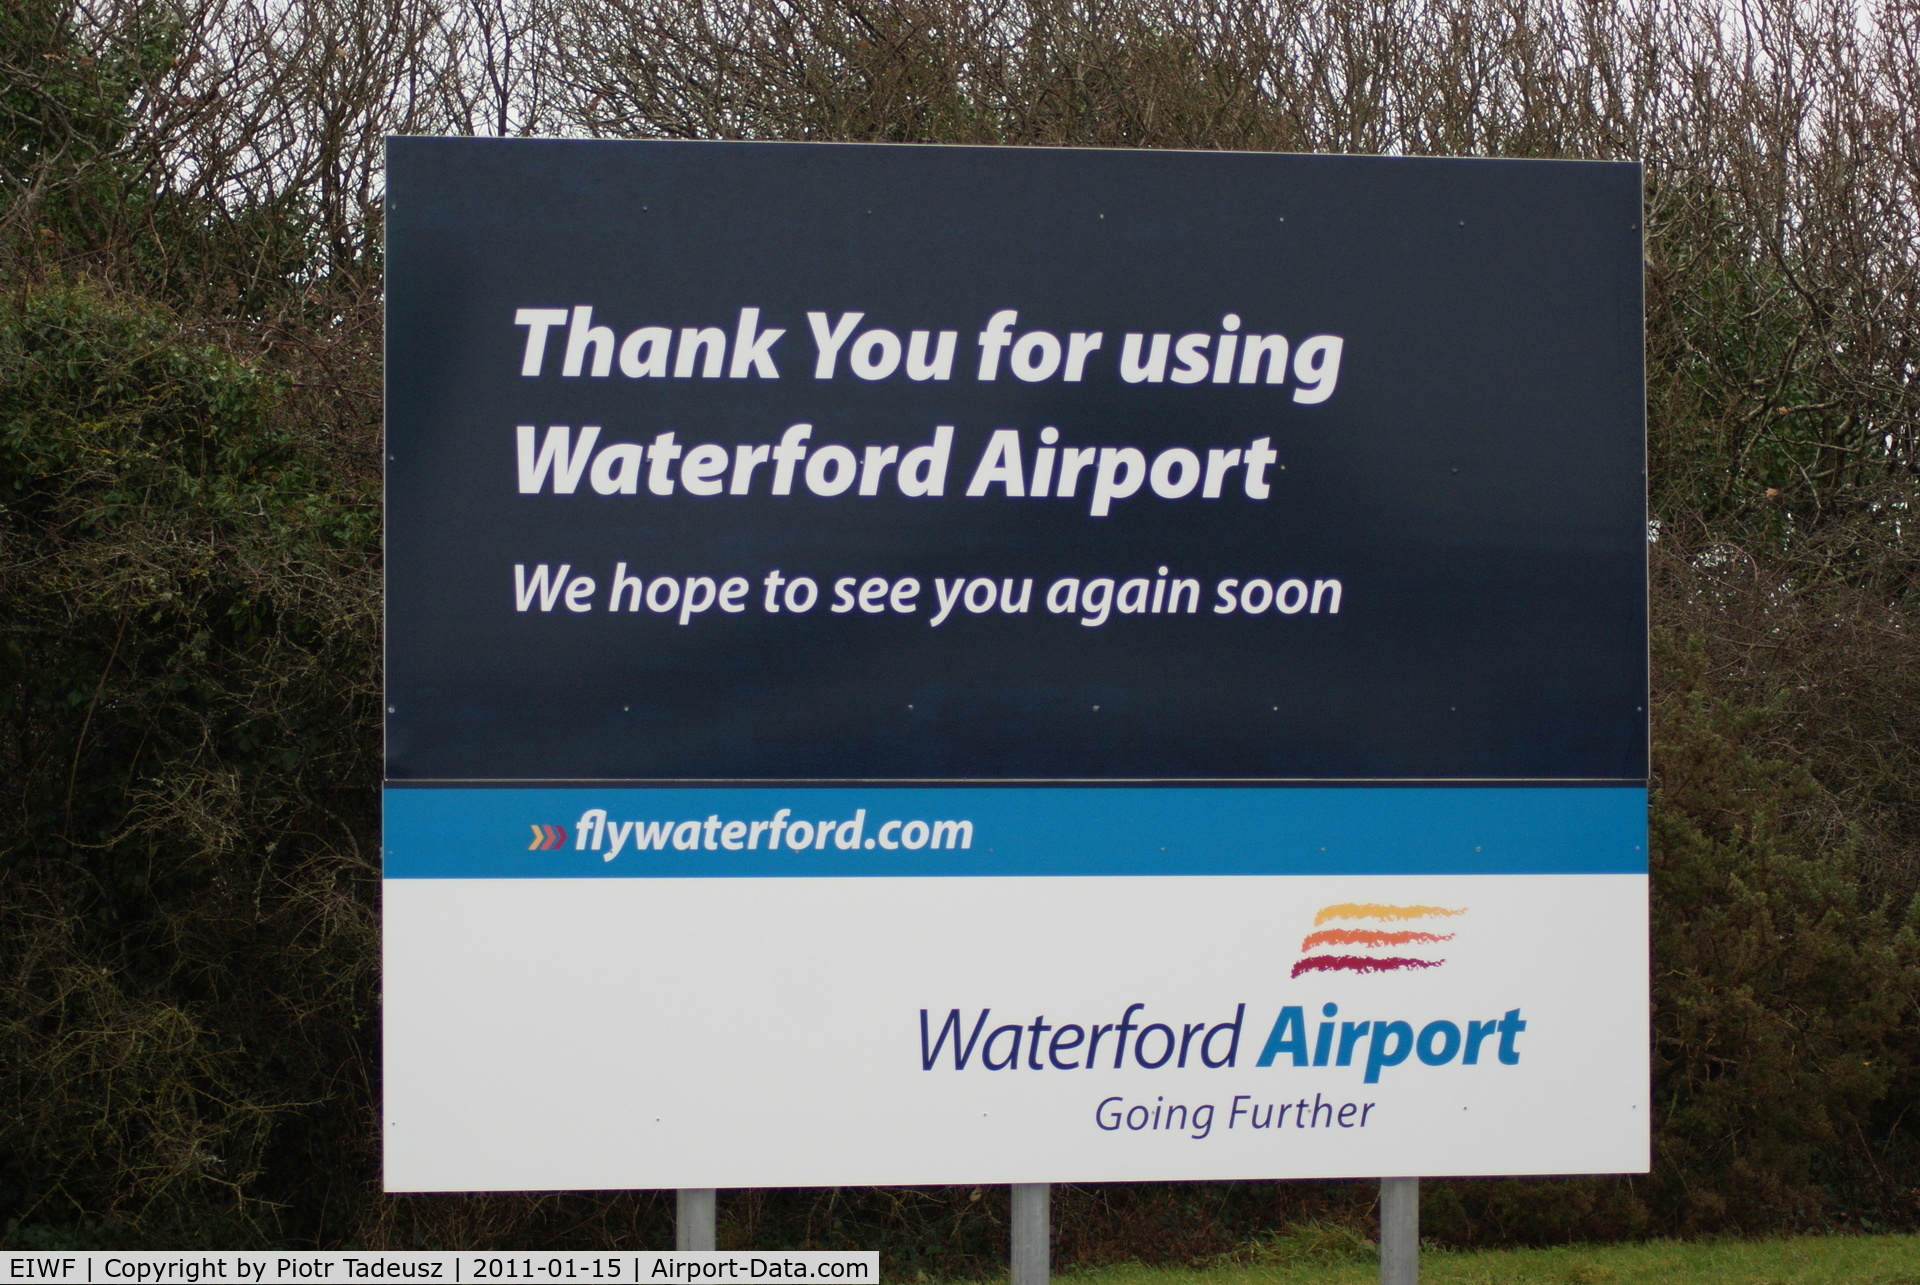 Waterford Airport, Waterford Ireland (EIWF) - Winter